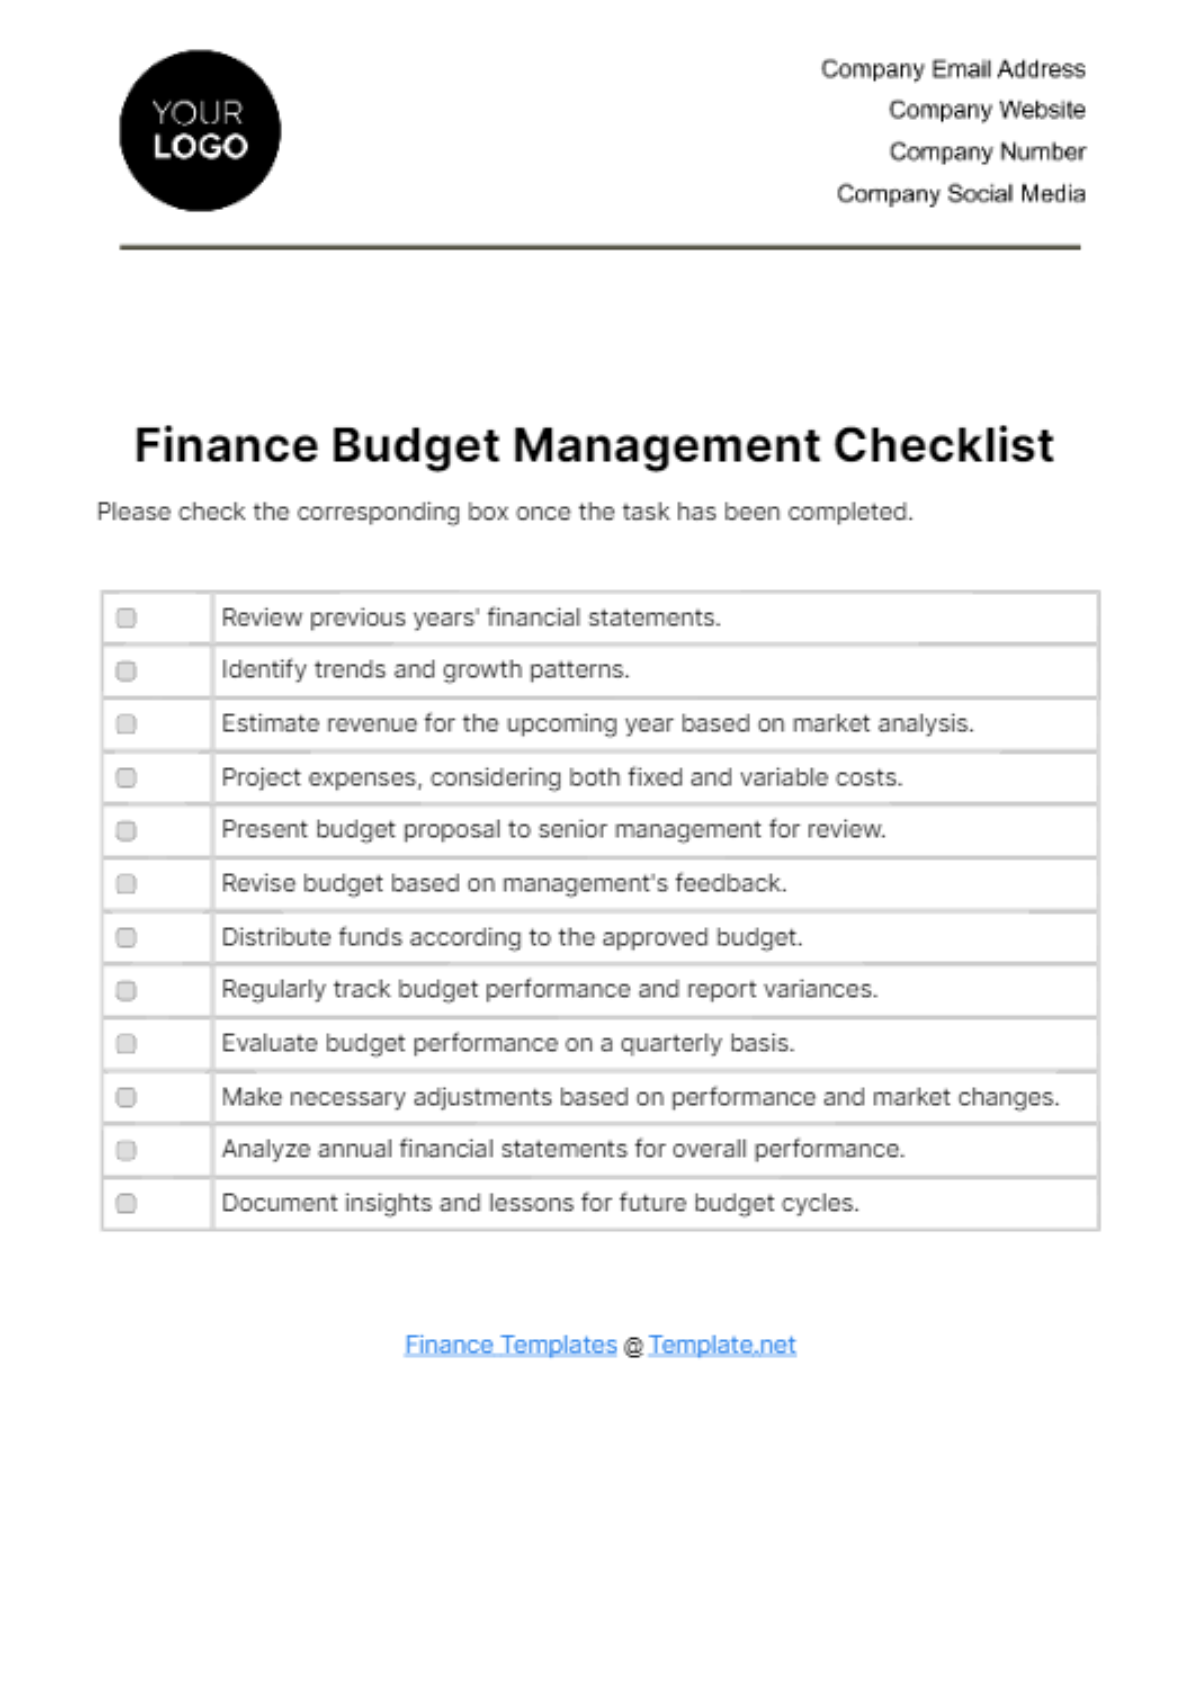 Free Finance Budget Management Checklist Template